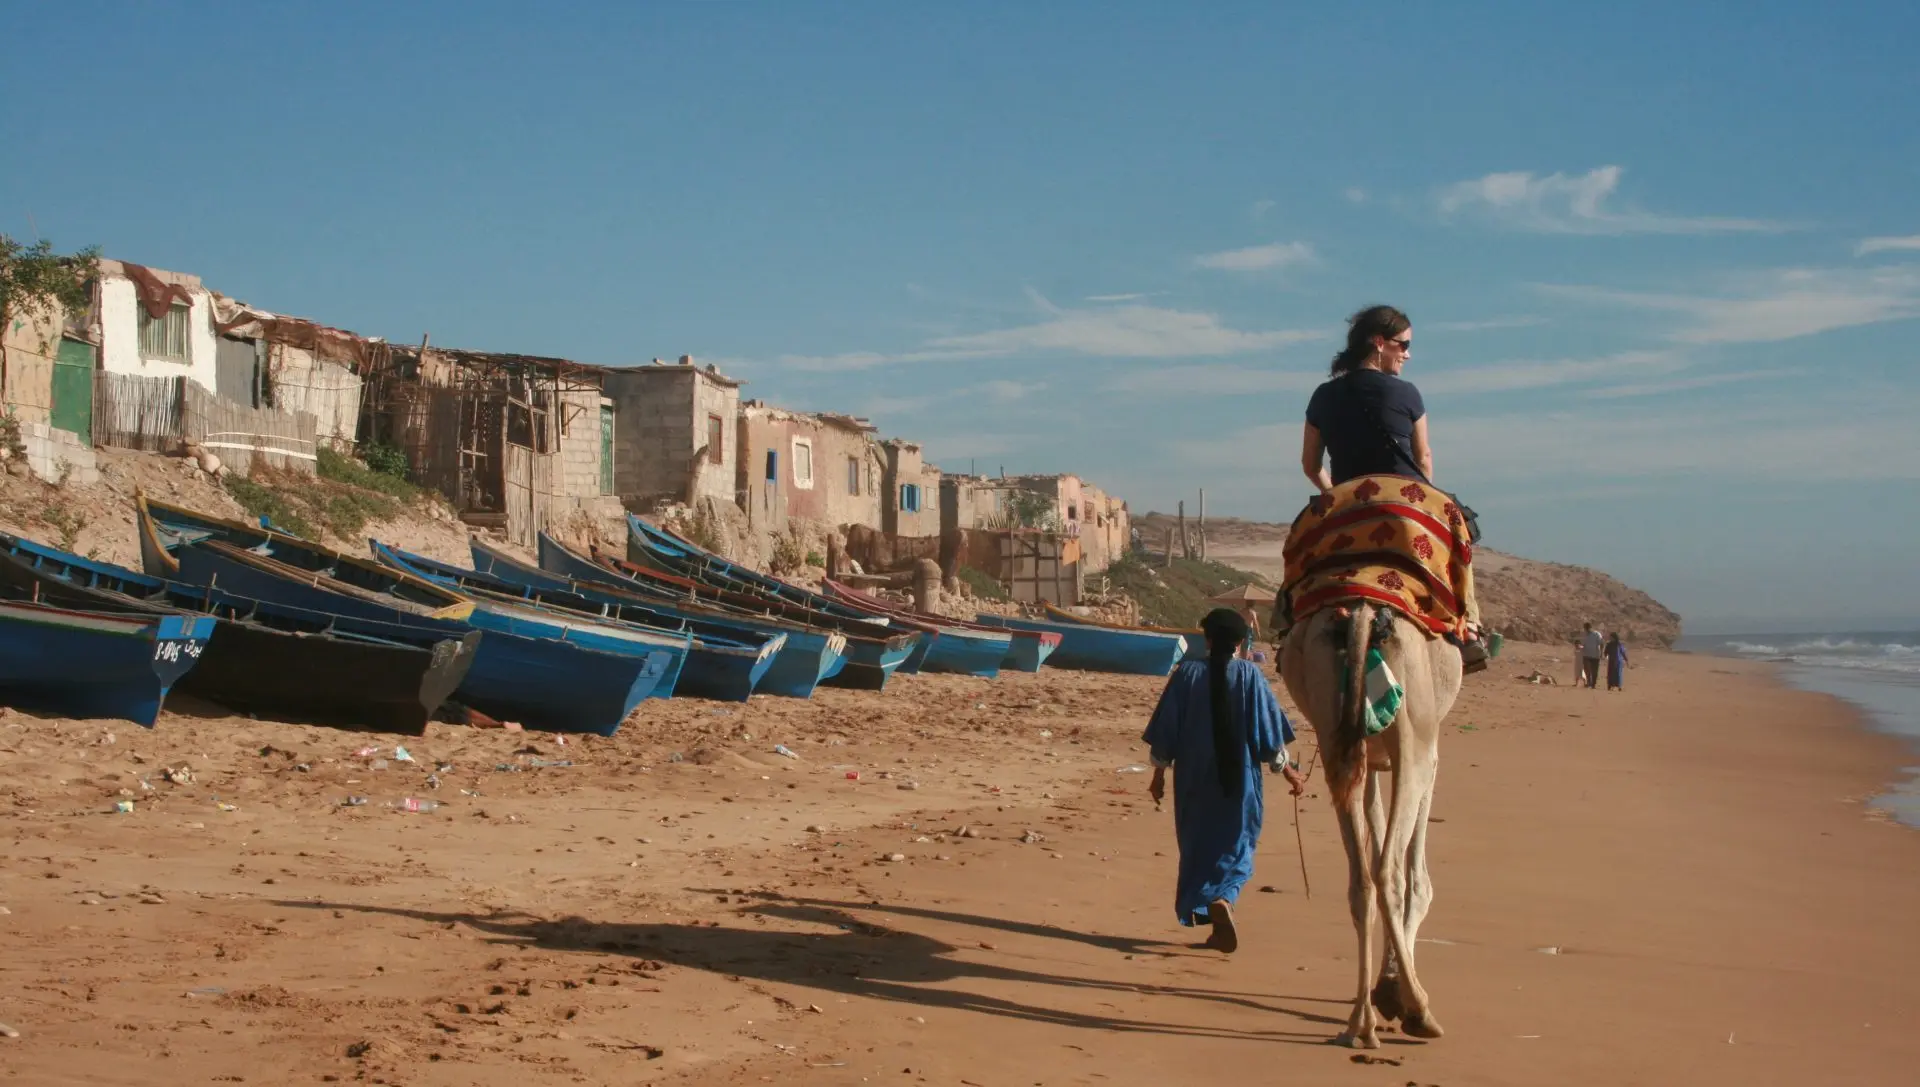 mudanzas en lomo de camellos en camellos - Da miedo los paseos en camello